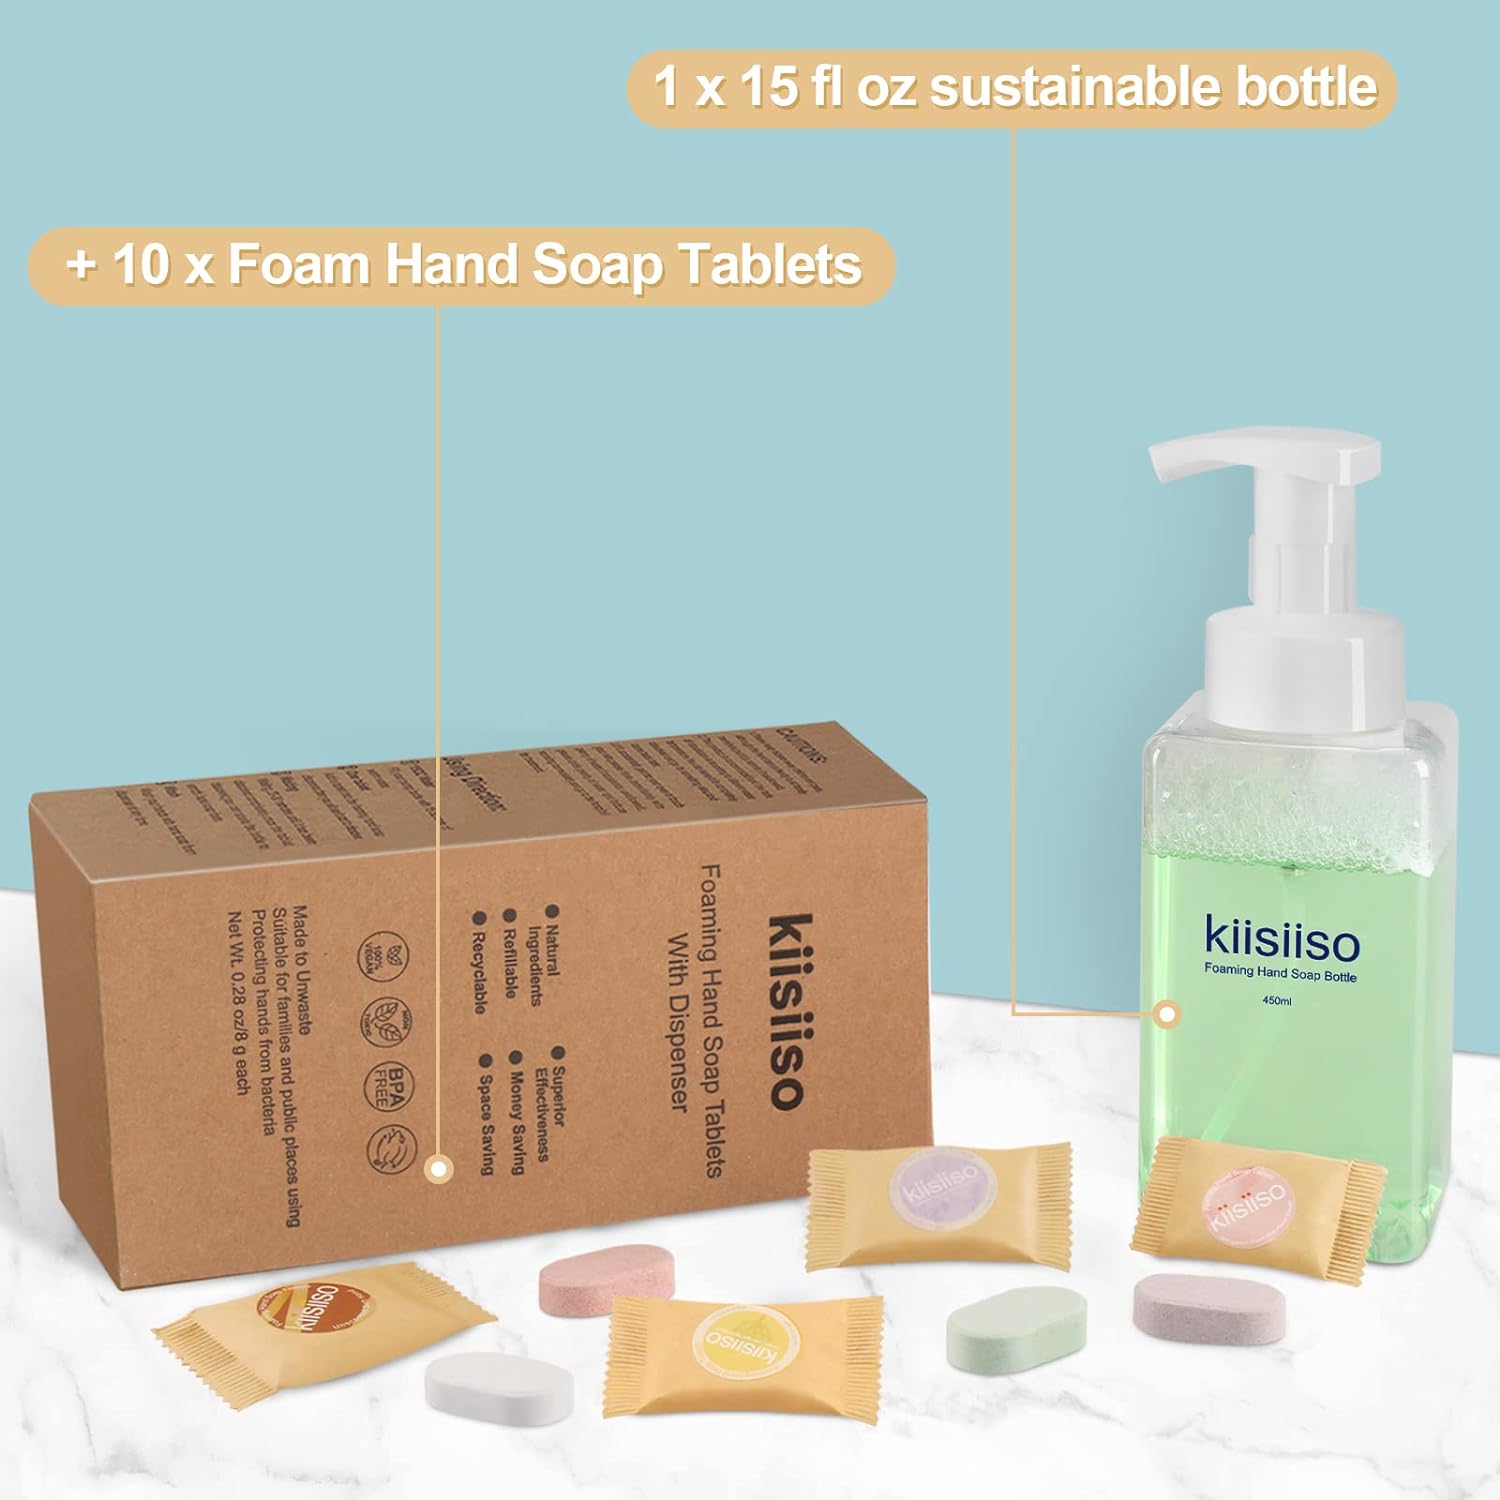 kiisiiso hand soap review